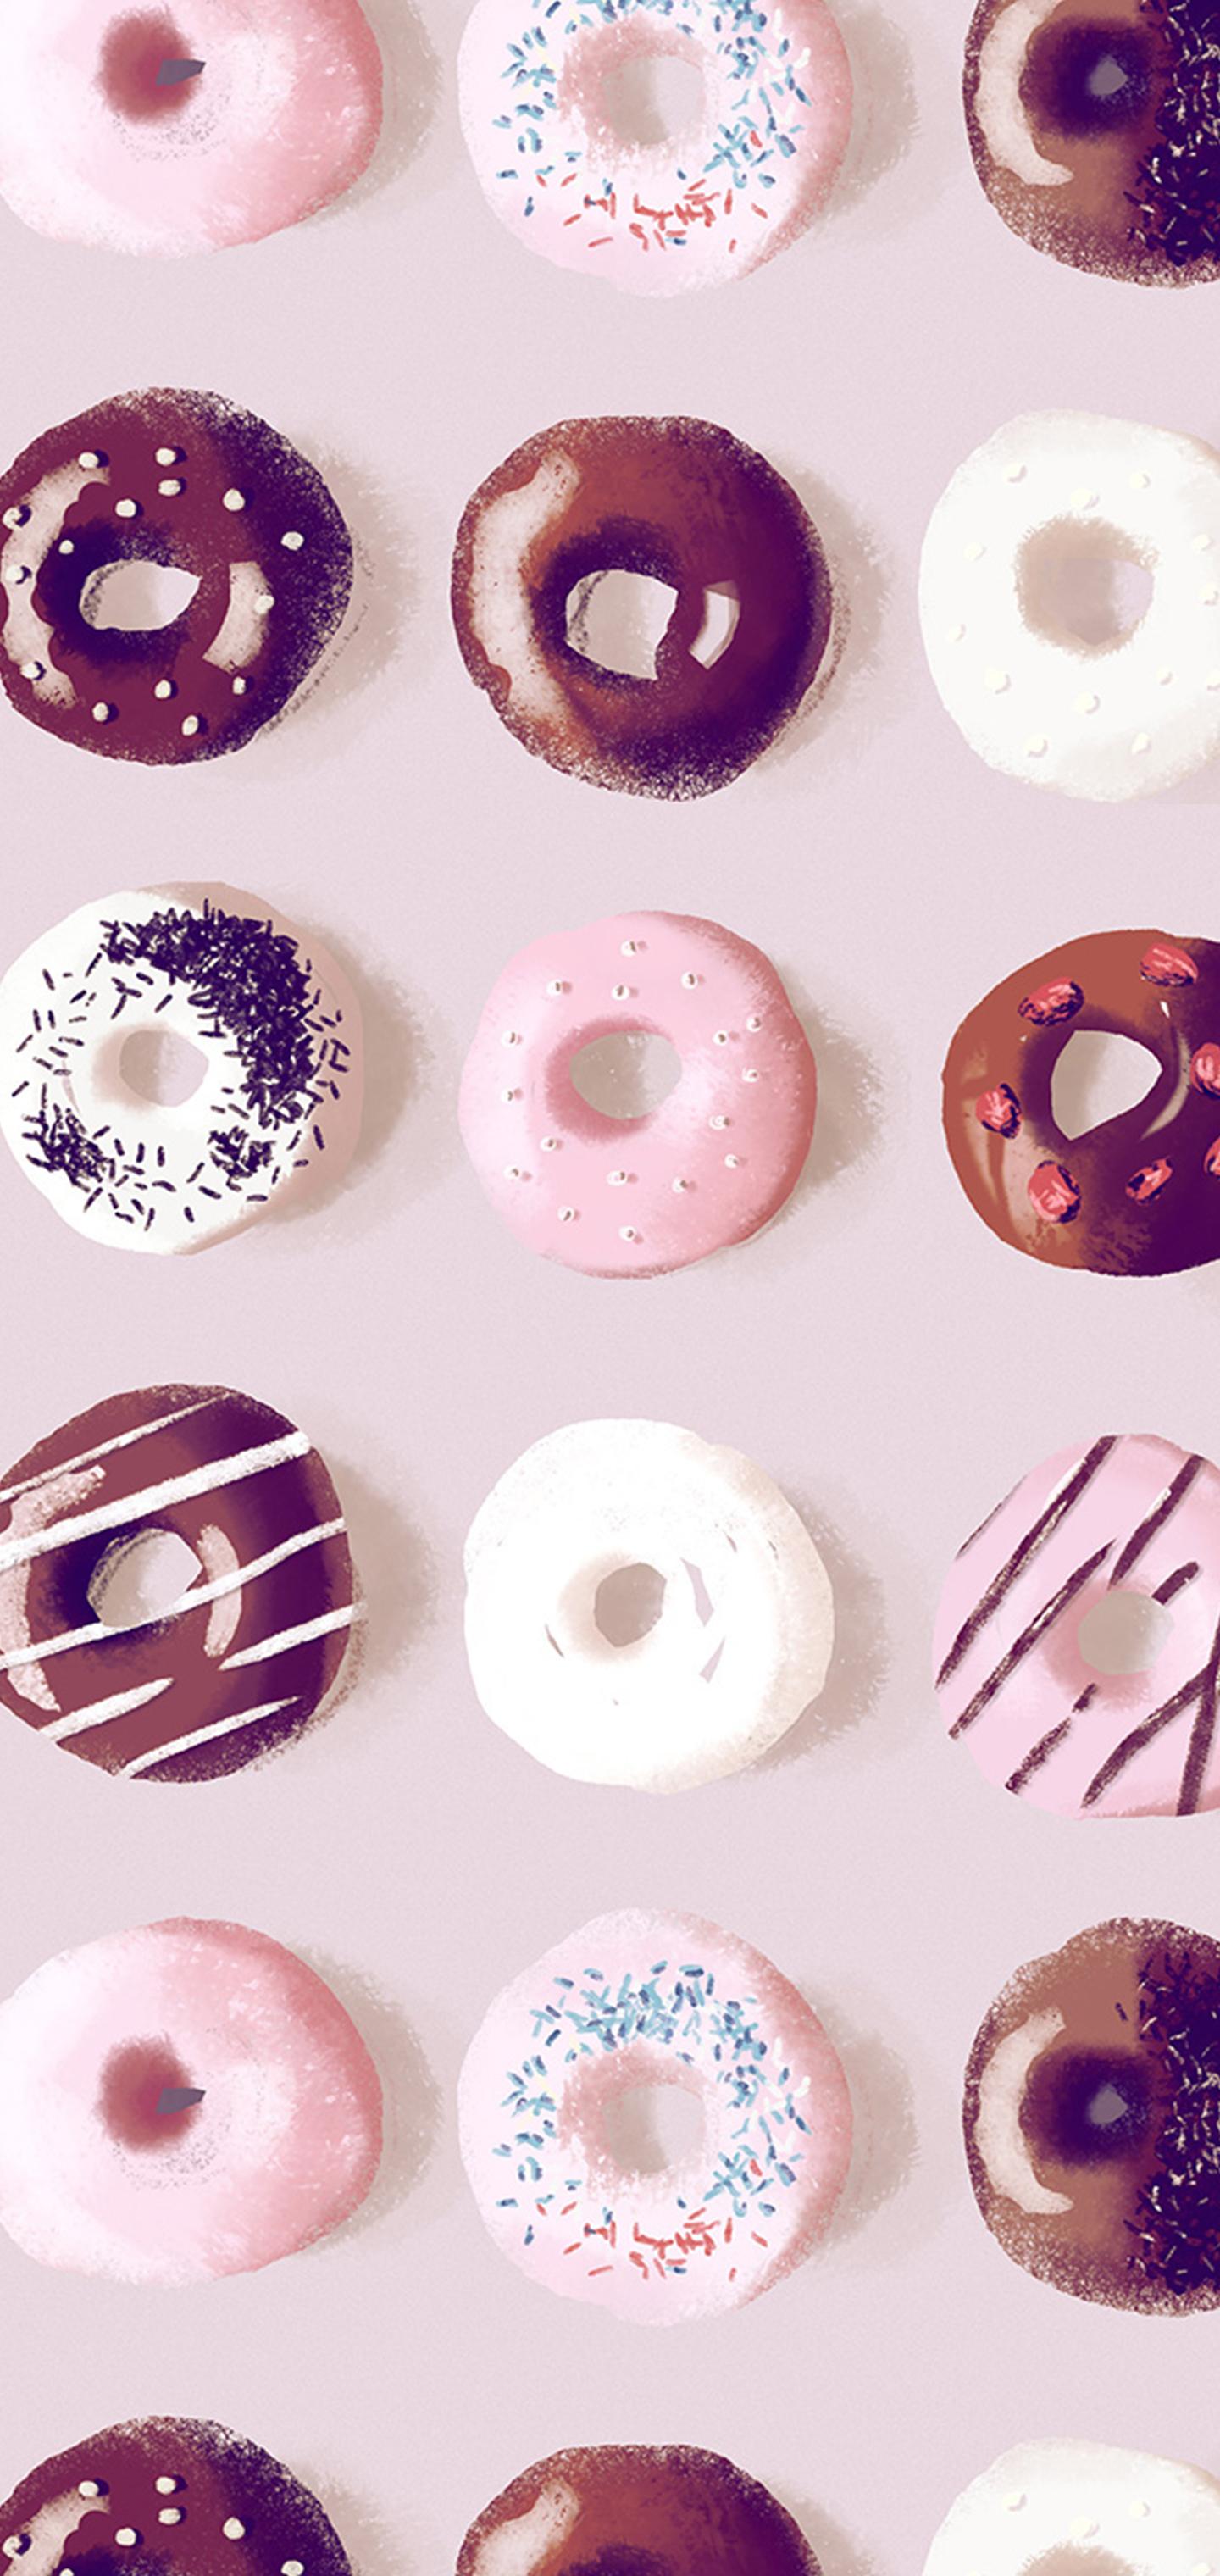 S10 wallpaper cute doughnuts